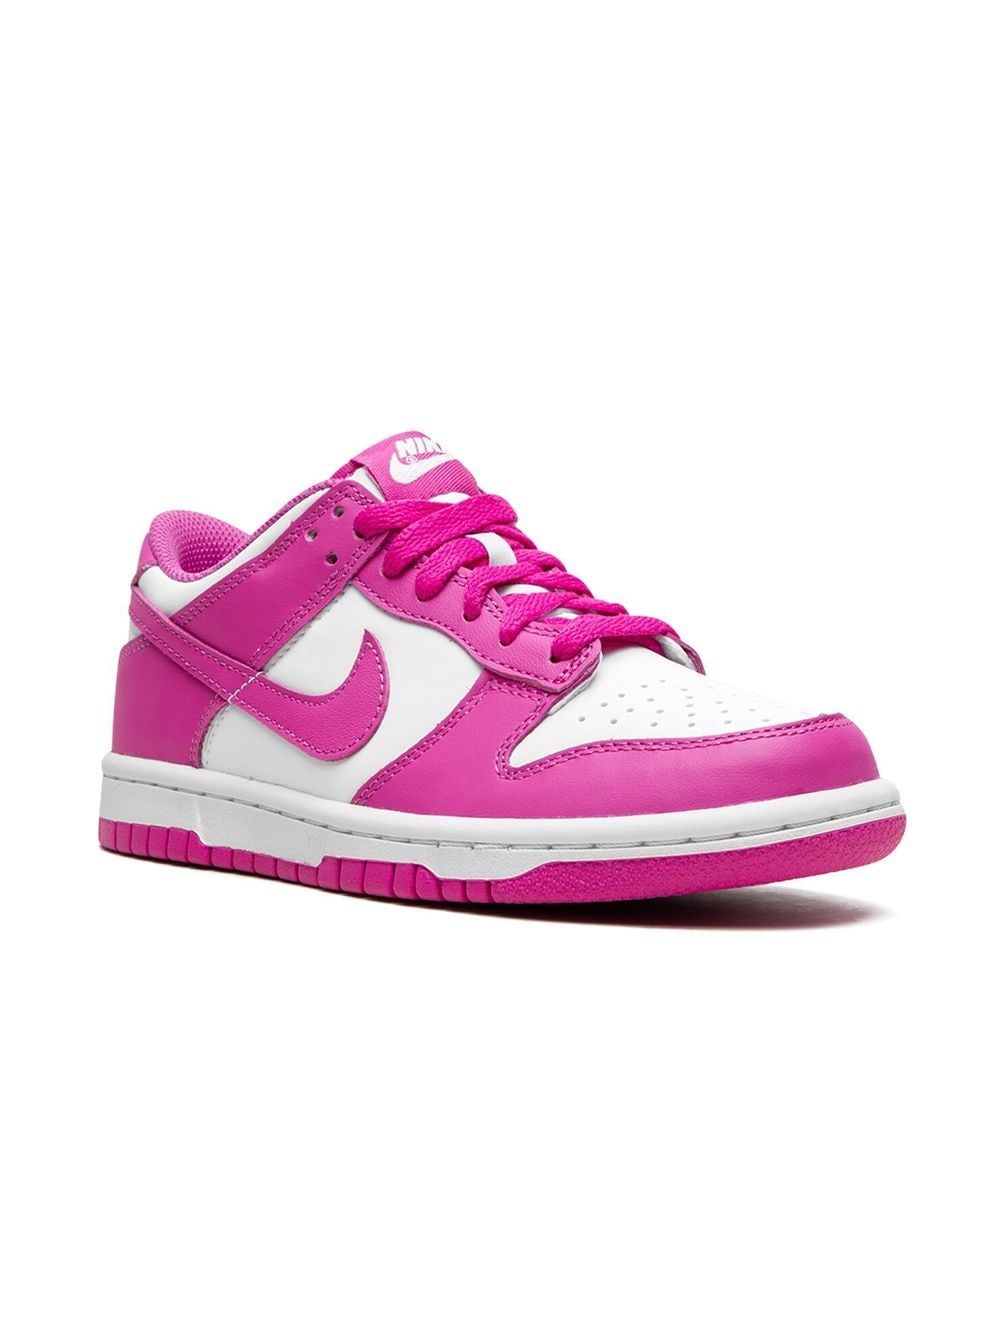 Nike Kids Dunk Low "Active Fuchsia" sneakers - Pink von Nike Kids